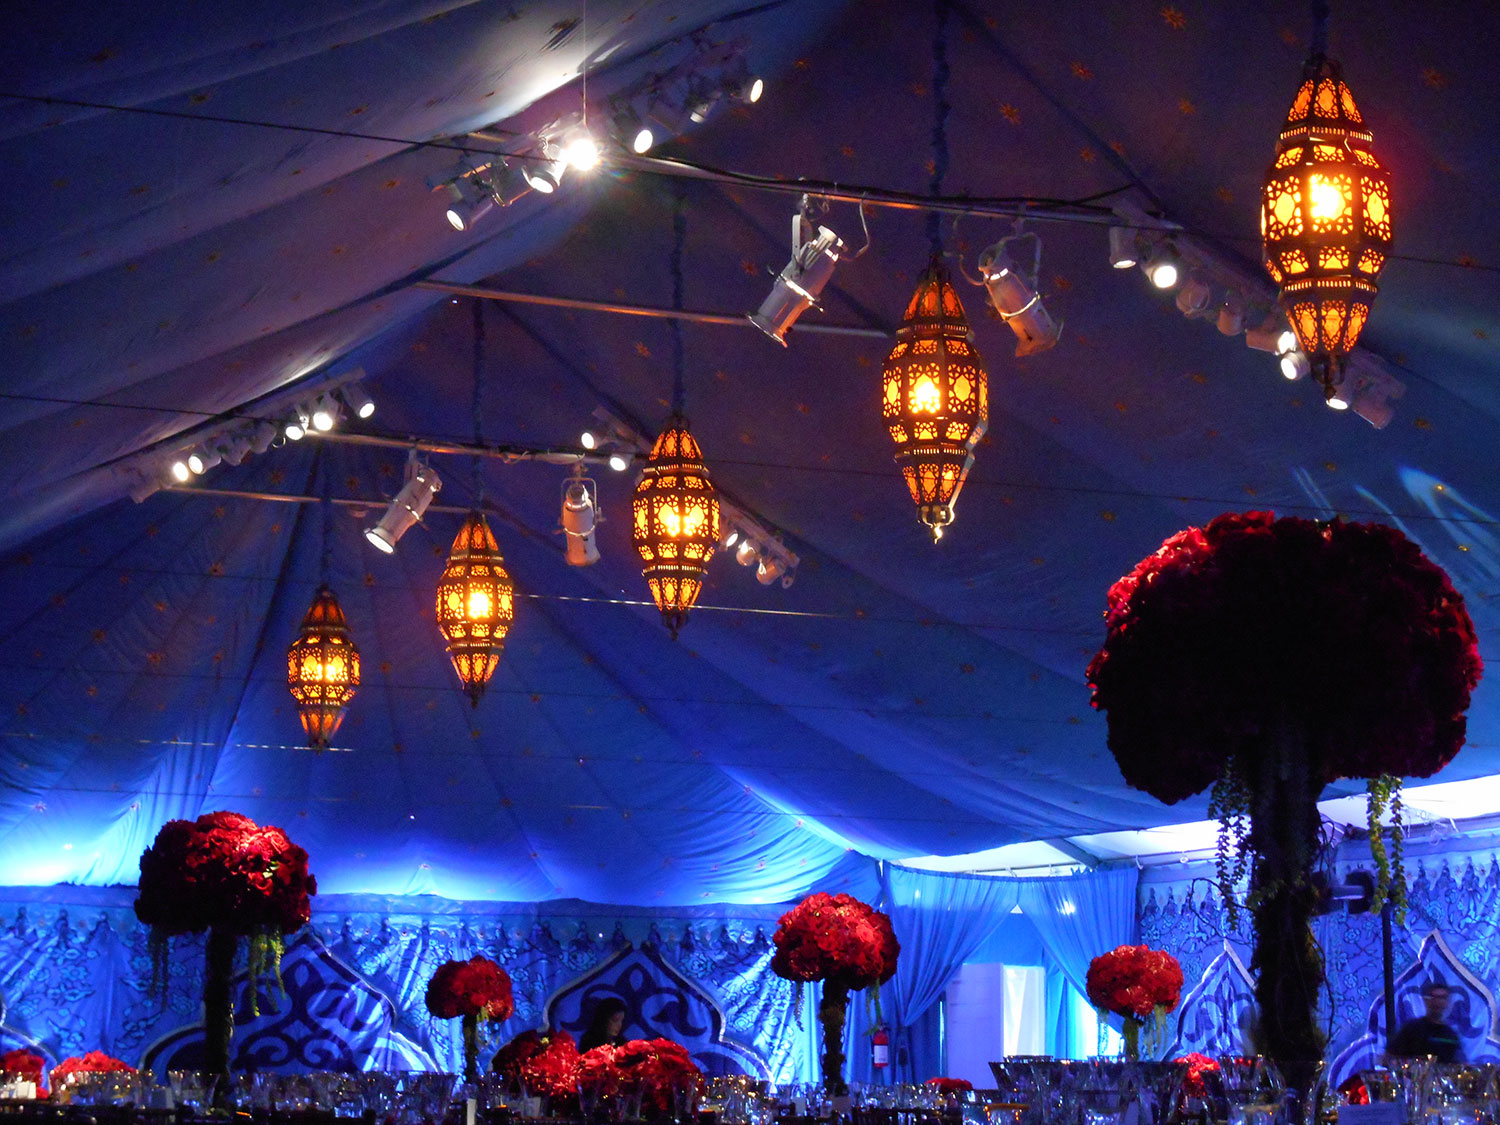 raj-tents-lighting-hanging-ajmer-blue-tent.jpg